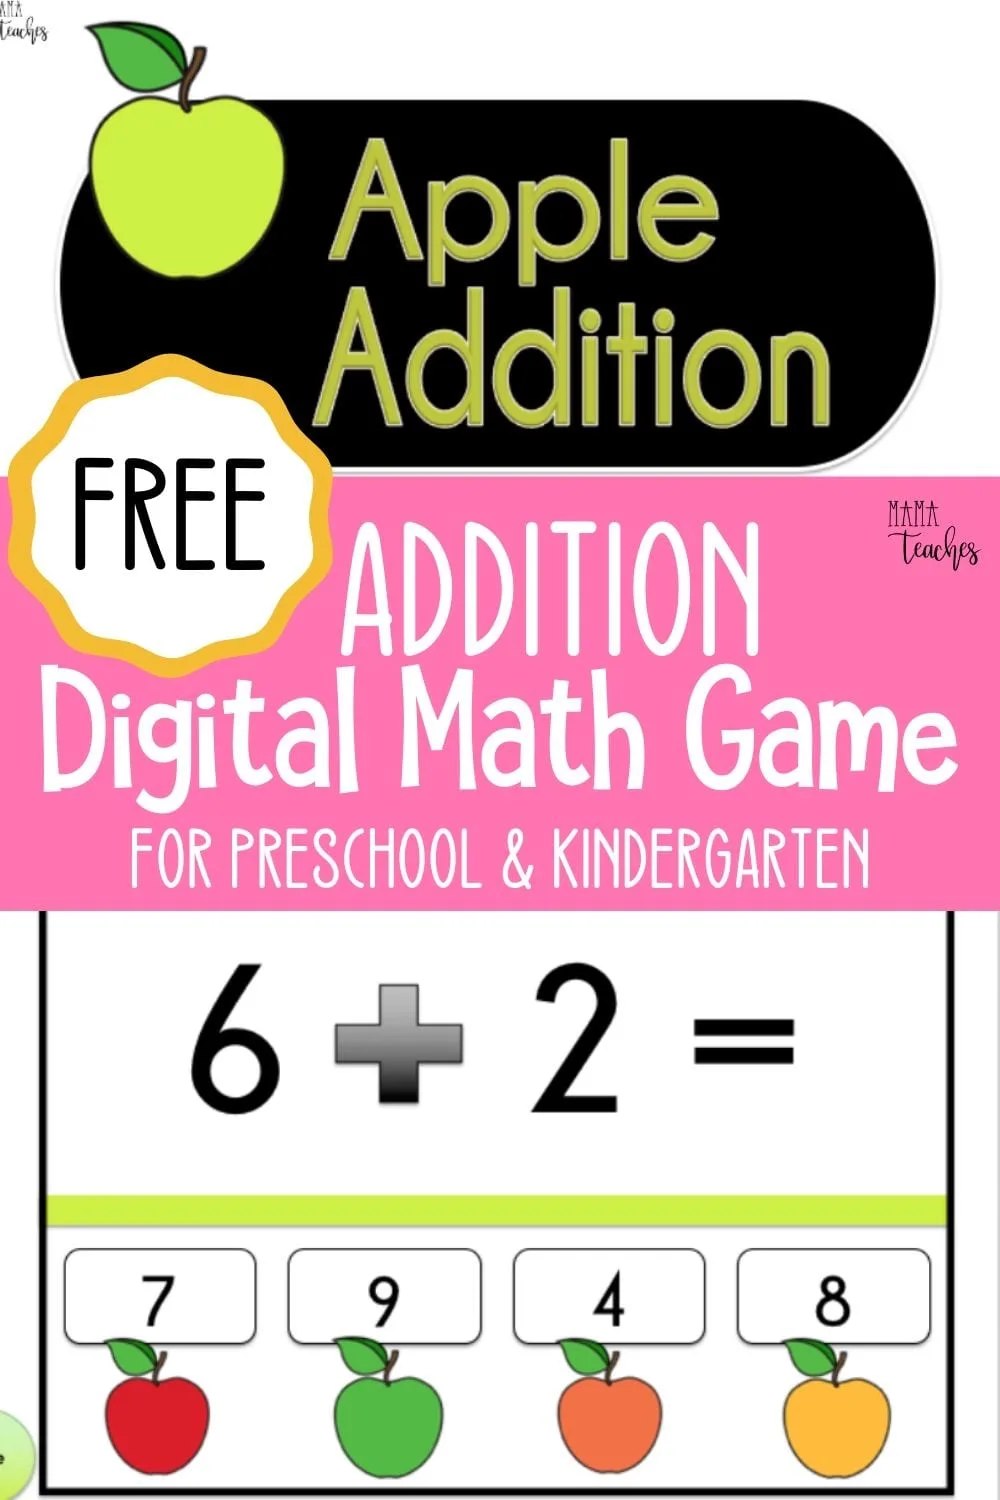 Free Addition Digital Math Game for Preschool and Kindergarten - MamaTeaches.com